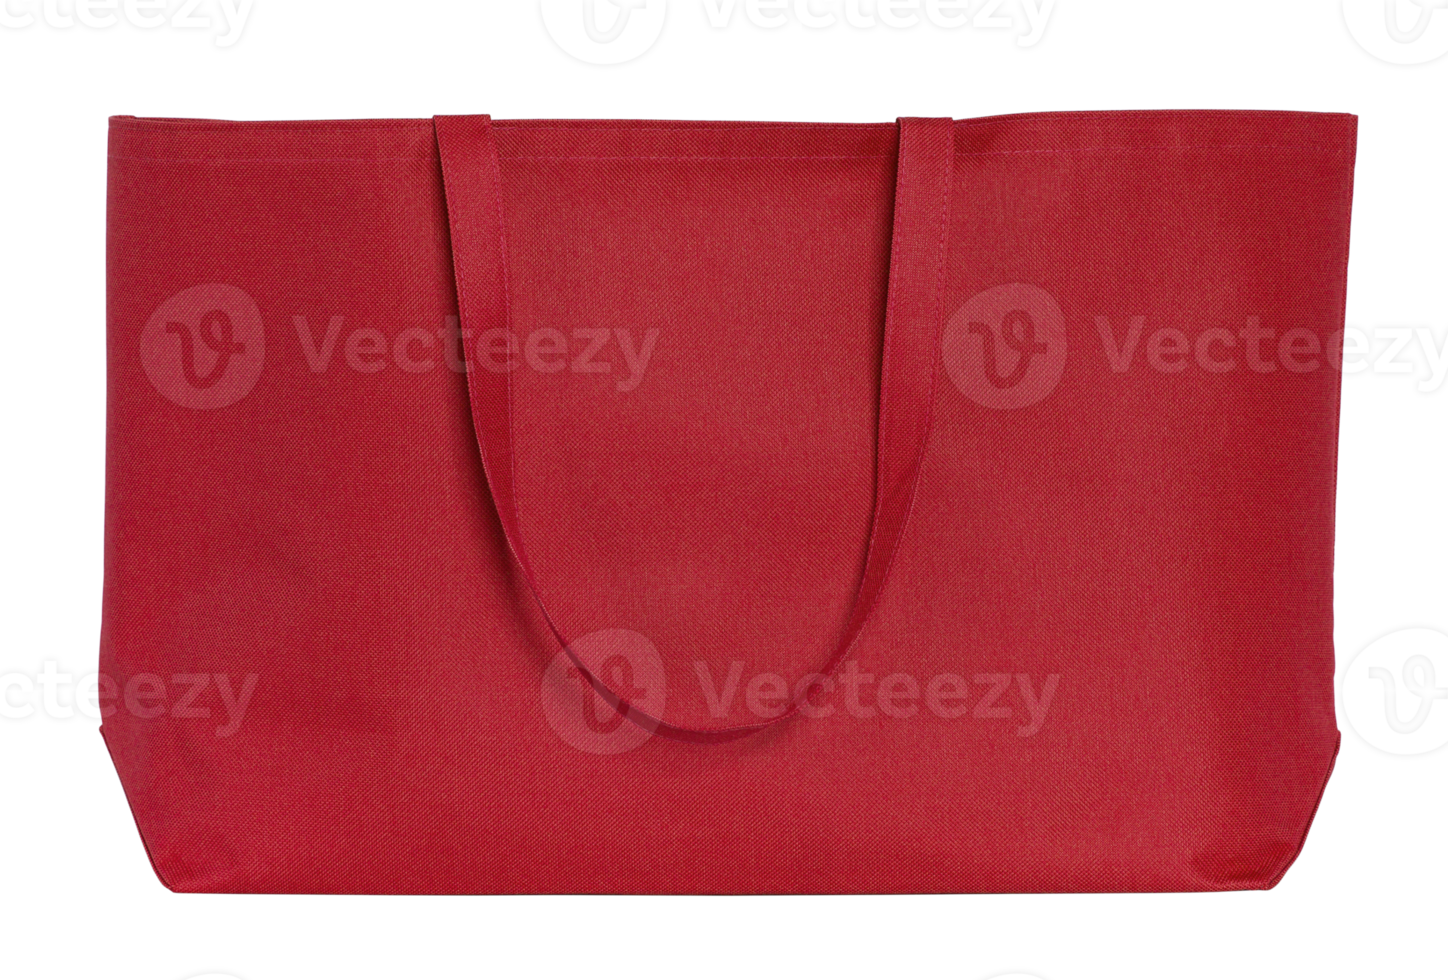 rood kleding stof zak geïsoleerd met knipsel pad voor mockup png